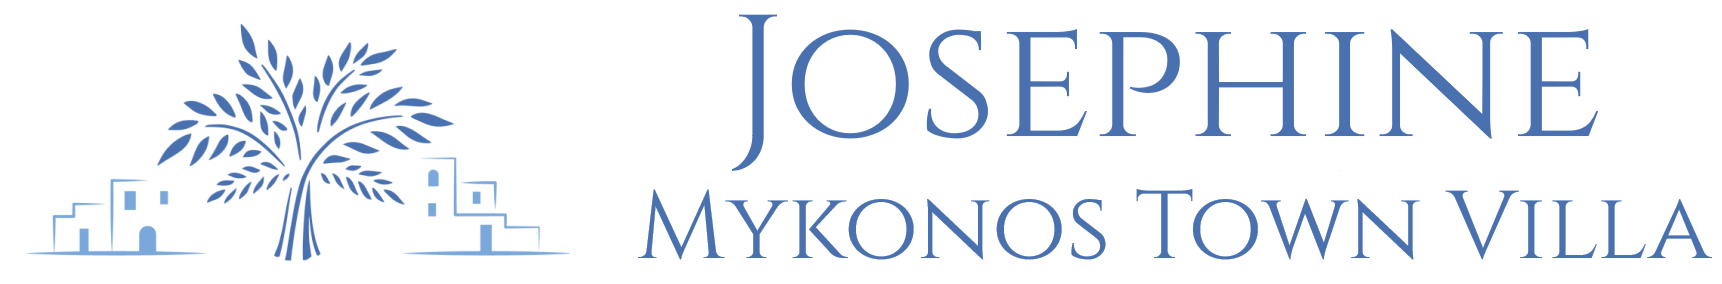 Josephine Mykonos